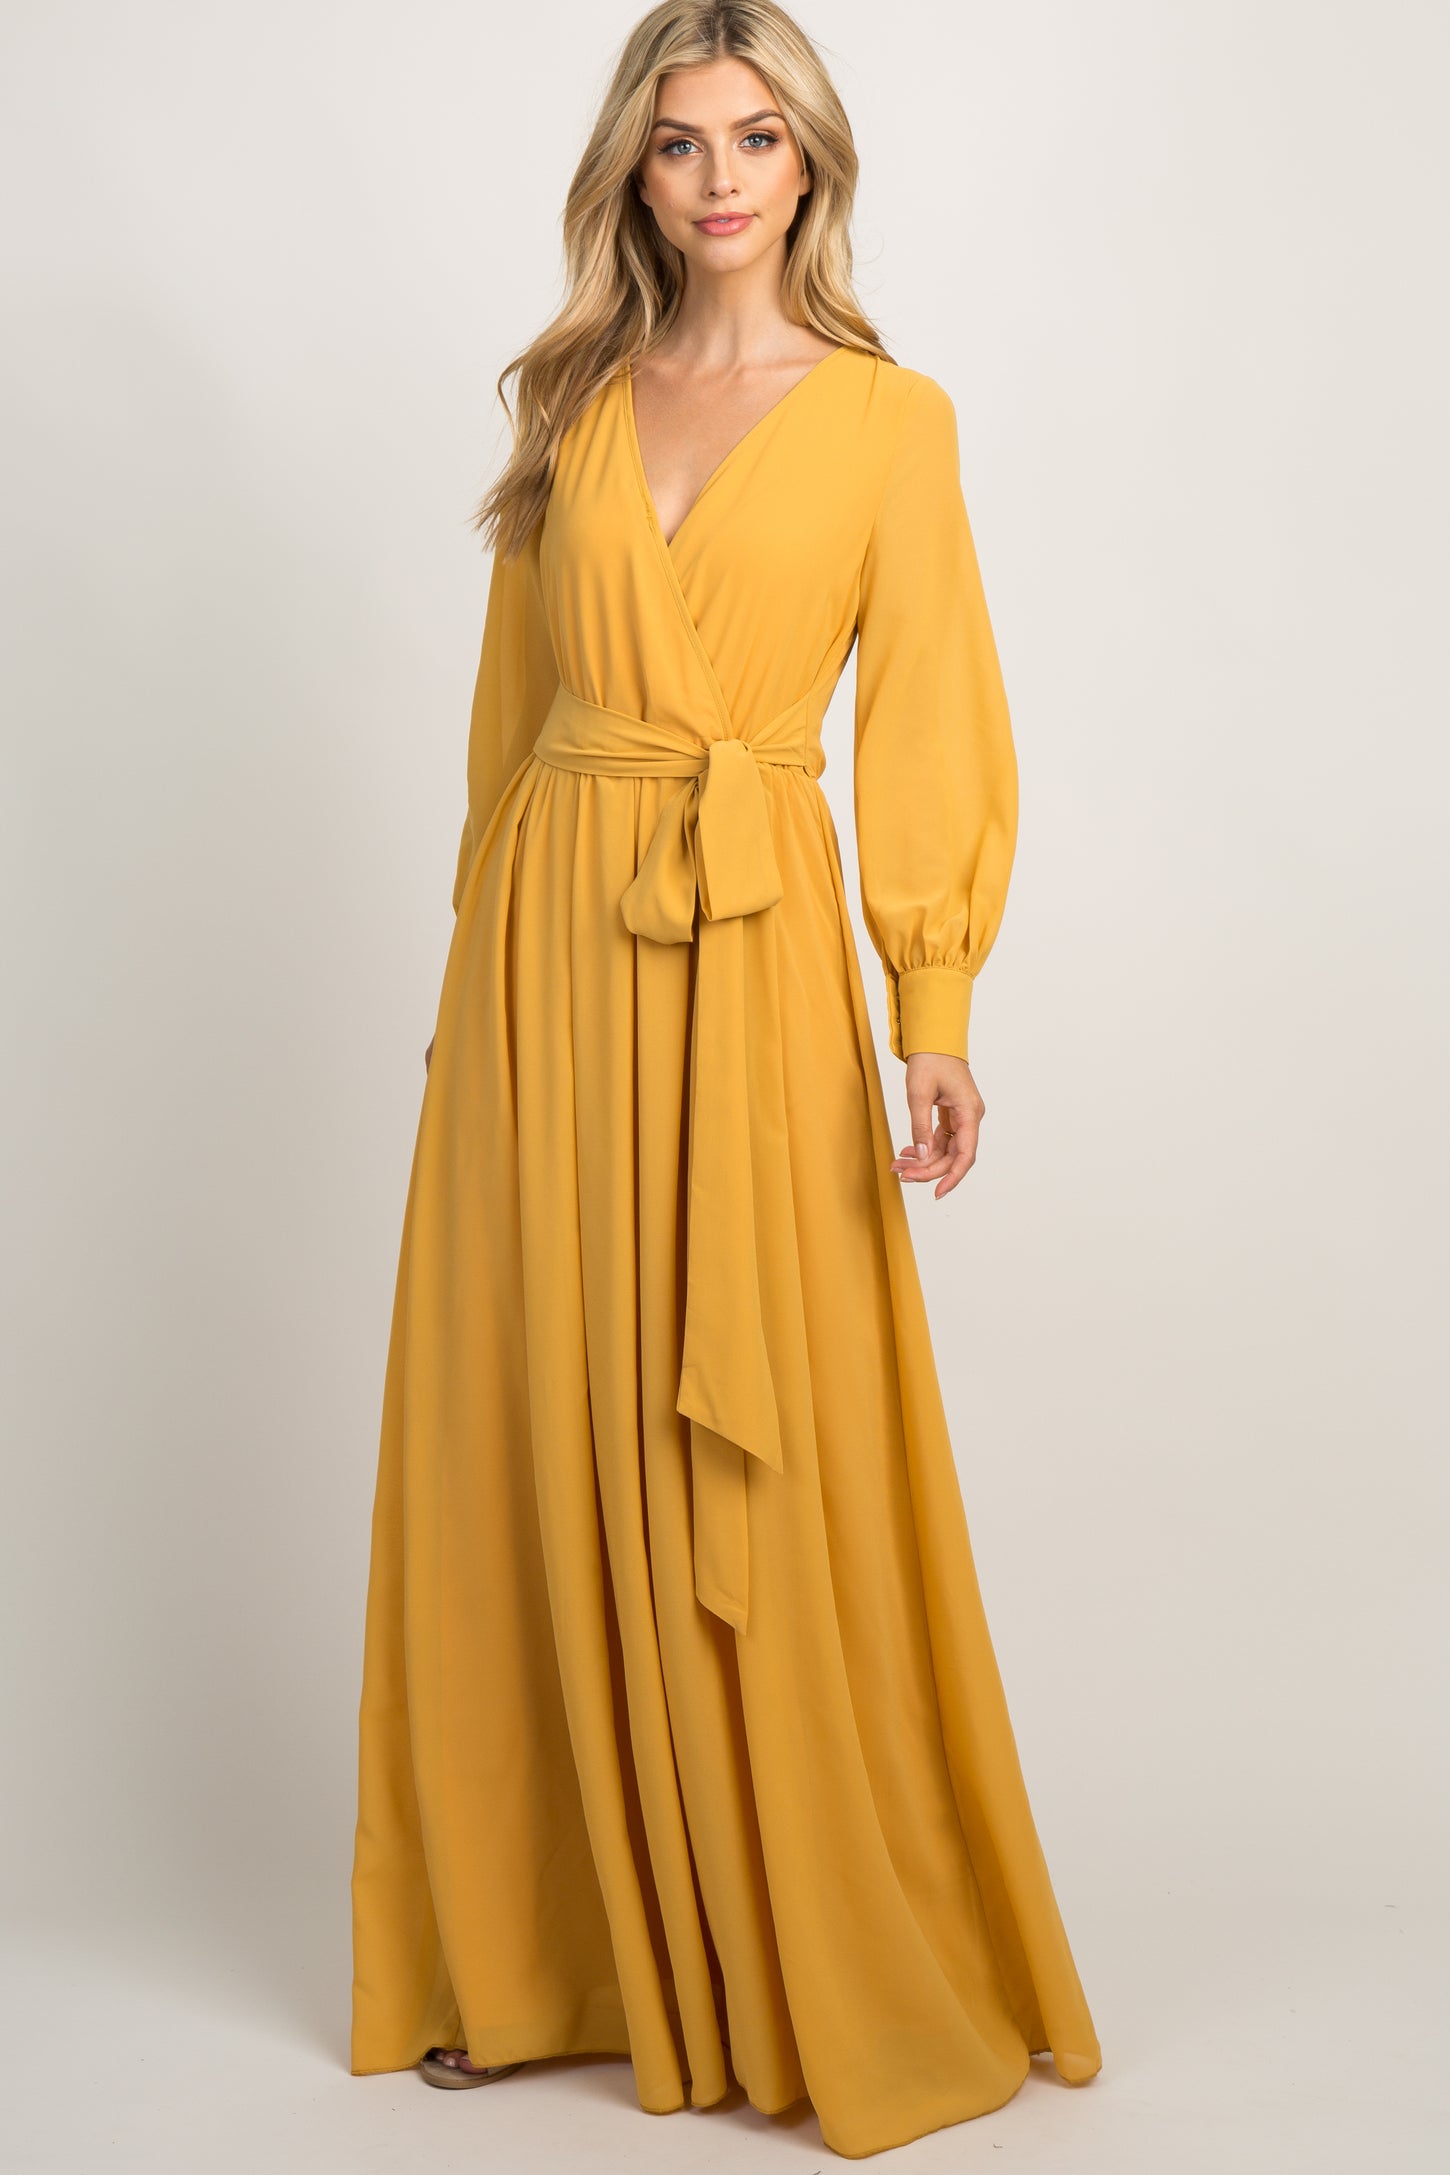 Yellow Chiffon Long Sleeve Pleated Maxi Dress